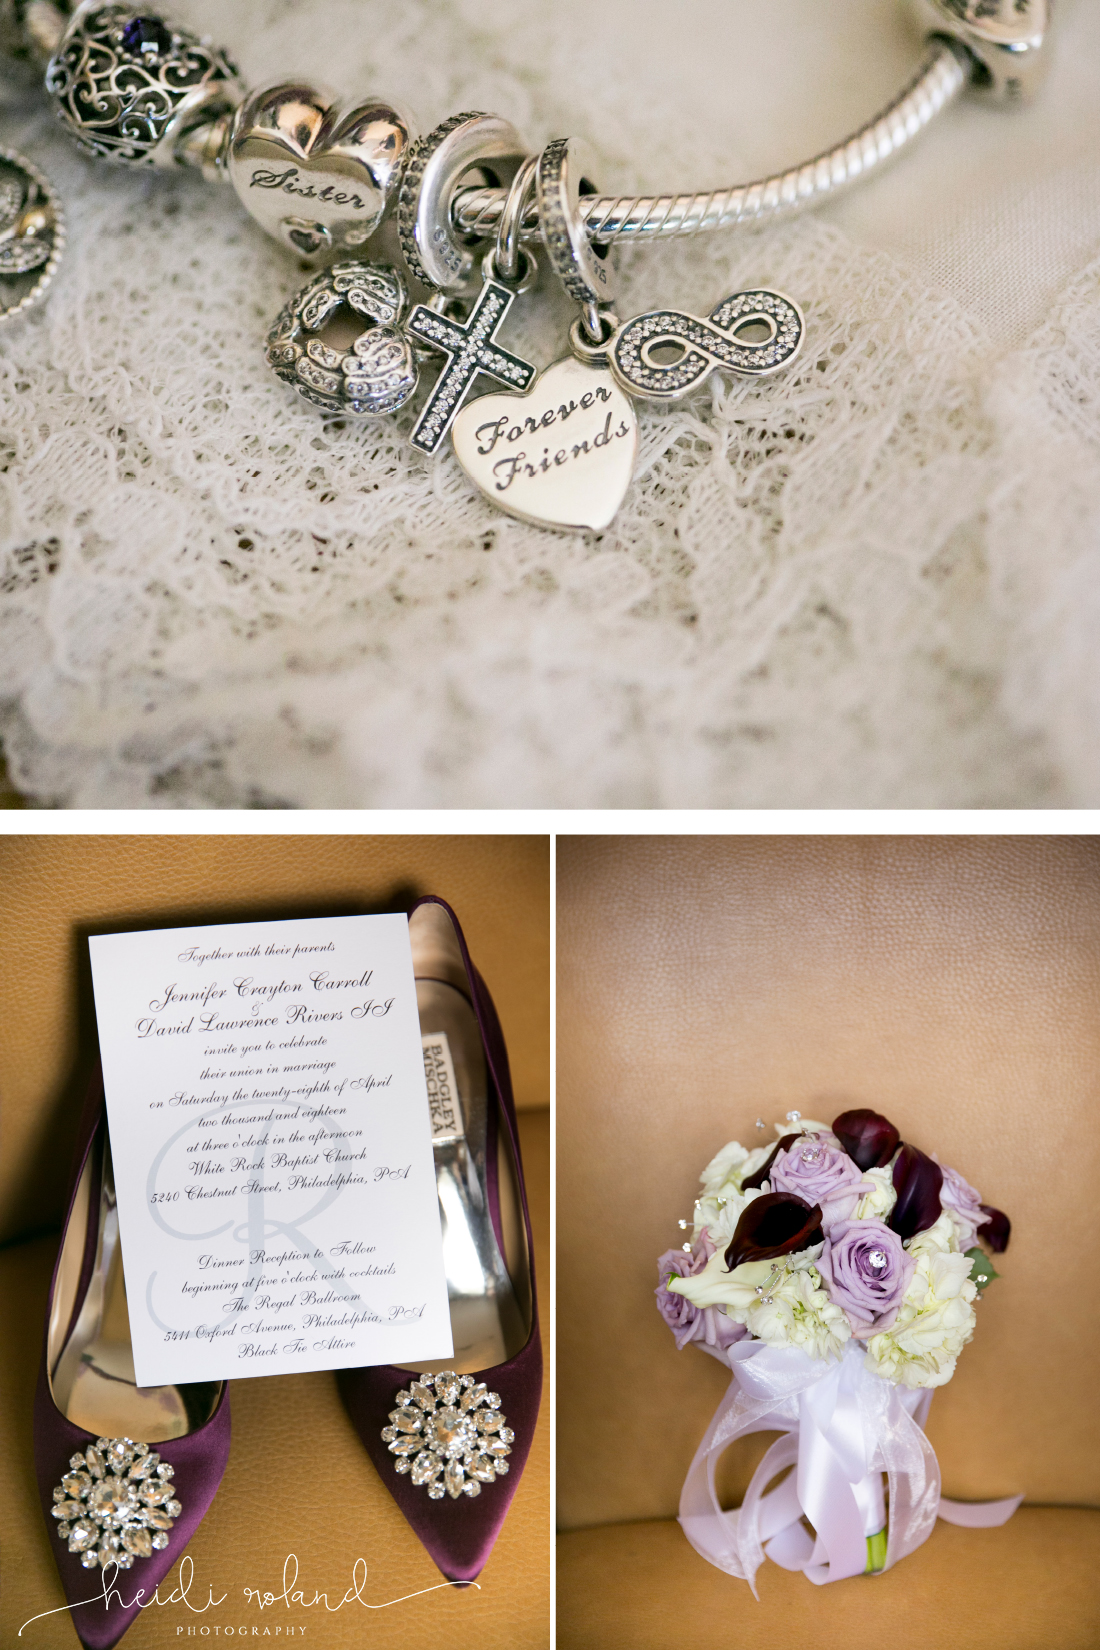  friendship bracelet from bridesmaids, Paul Beale flowers, wedding invitation